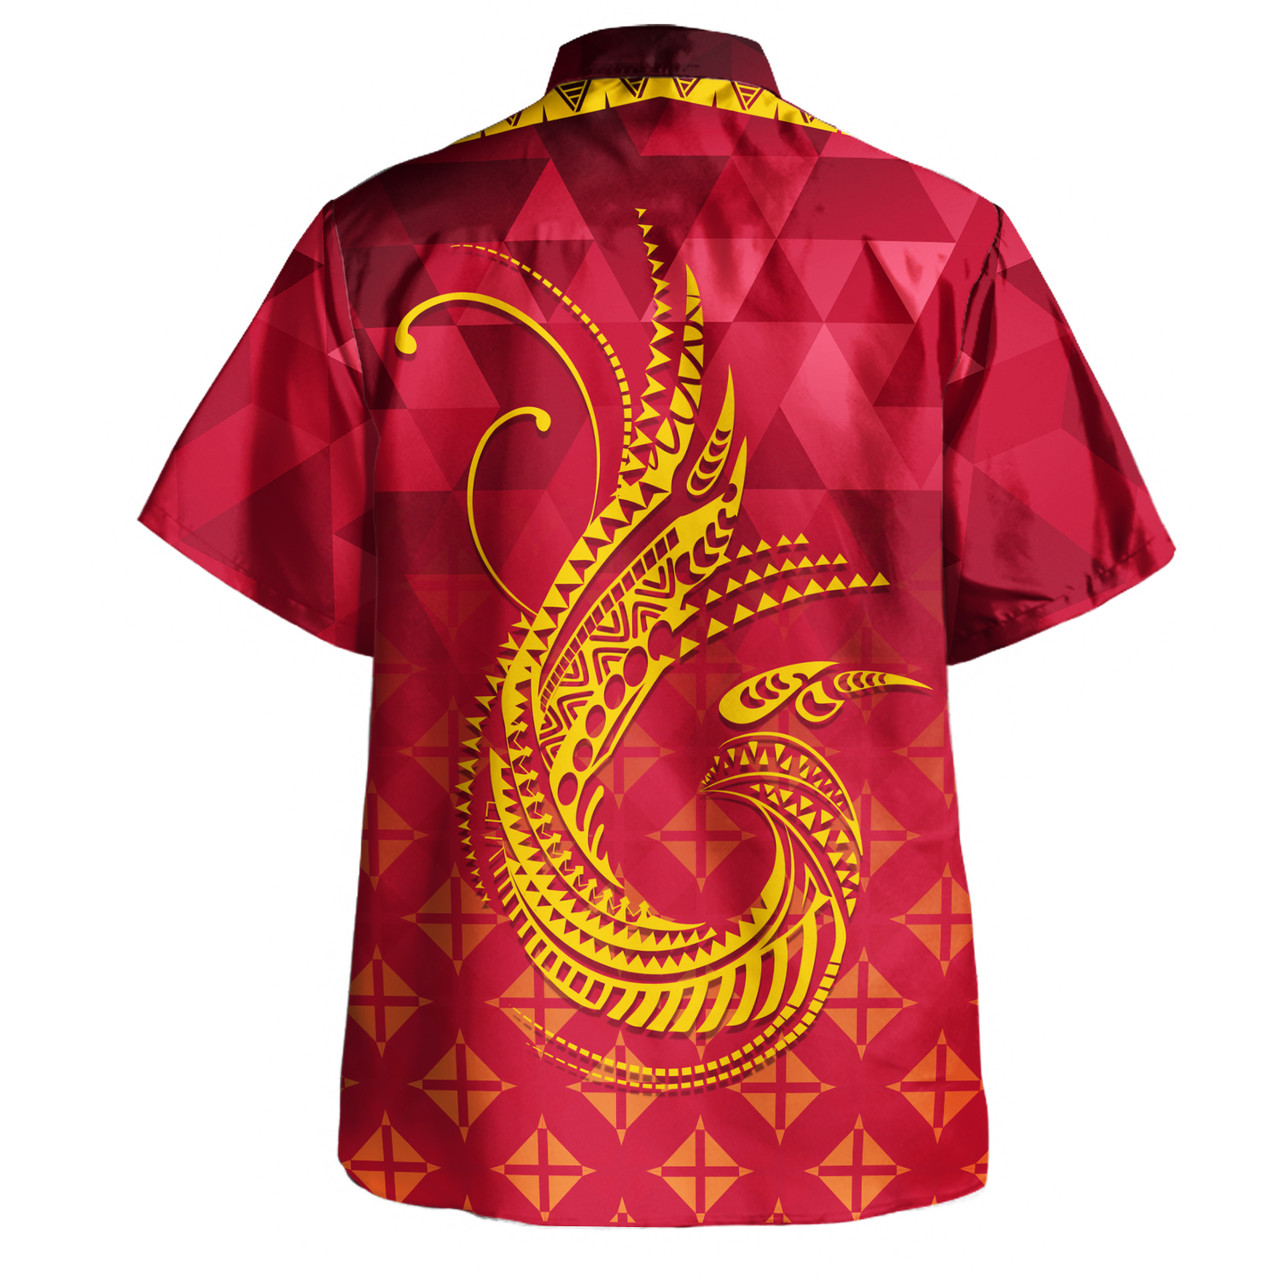 Papua New Guinea Hawaiian Shirt Lowpolly Pattern with Polynesian Motif